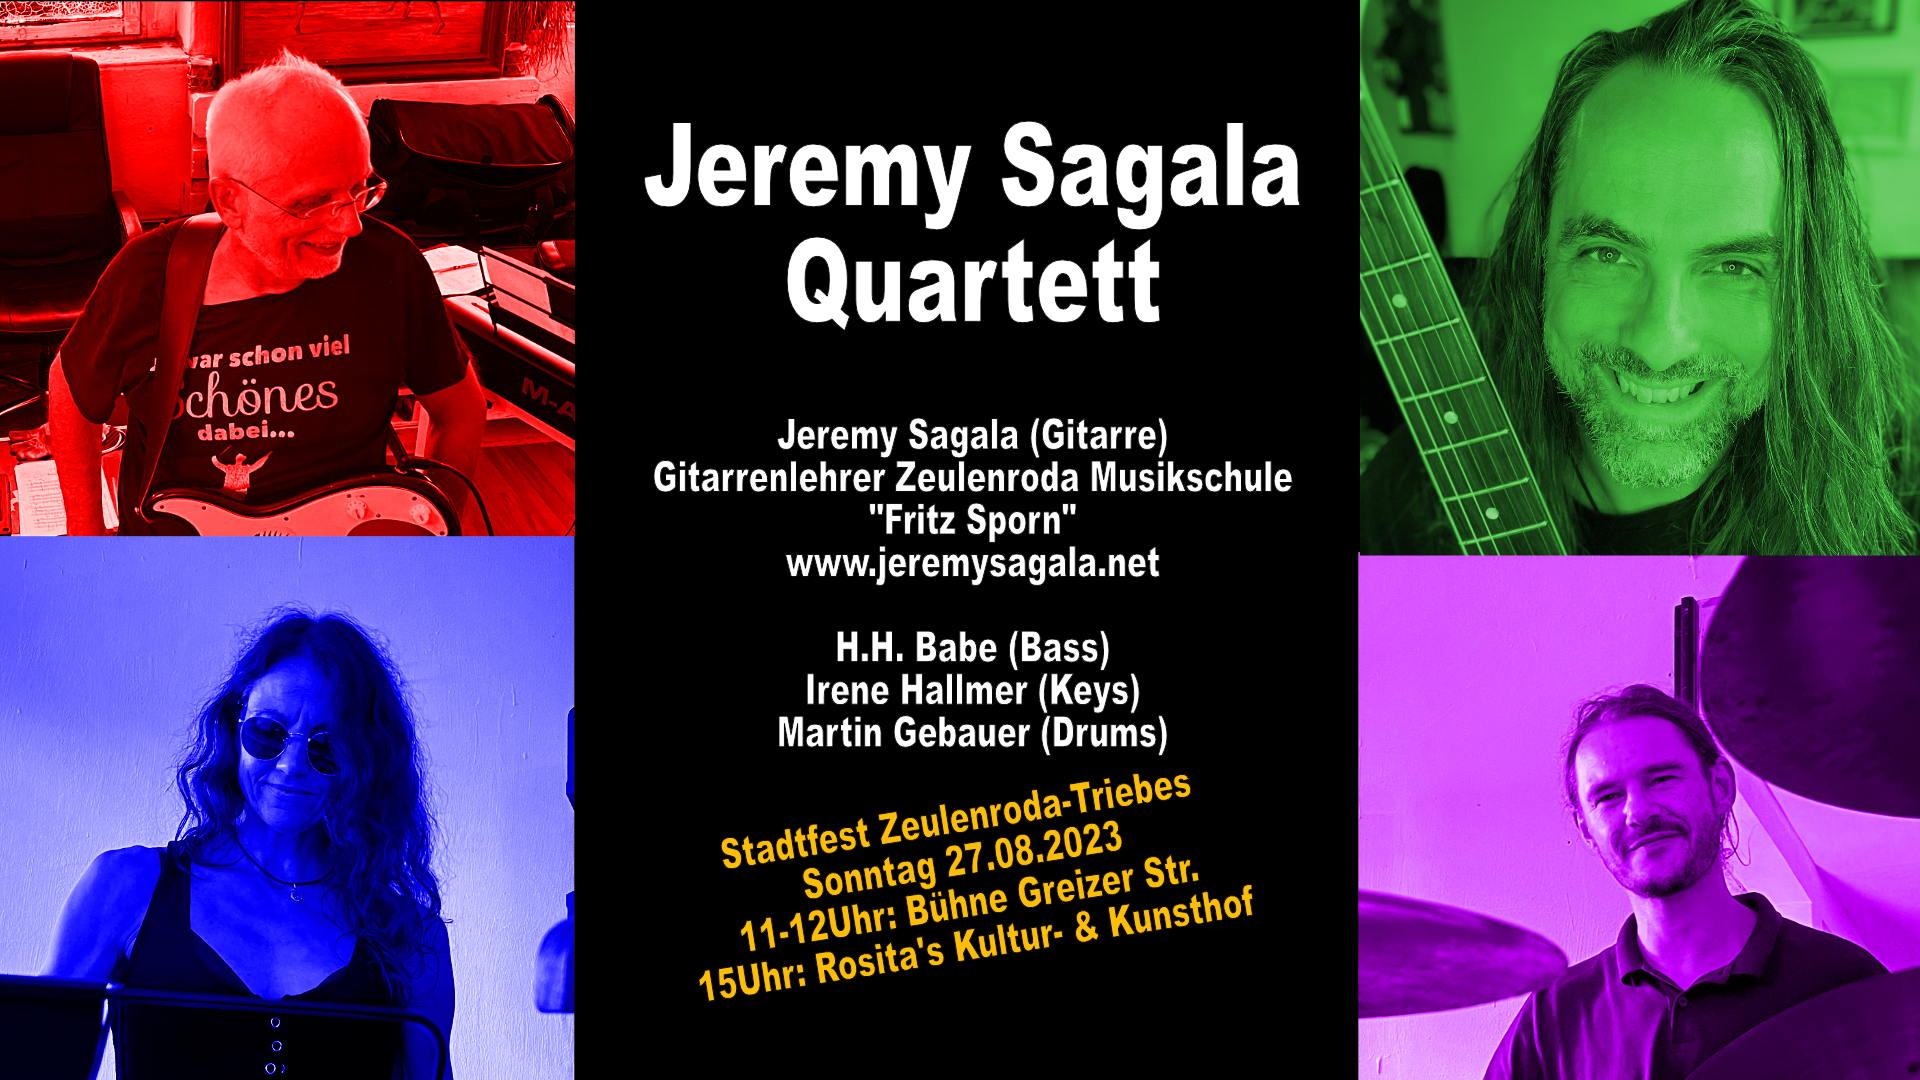 Jeremy Sagala Quartet at the Zeulenroda Stadtfest 2023